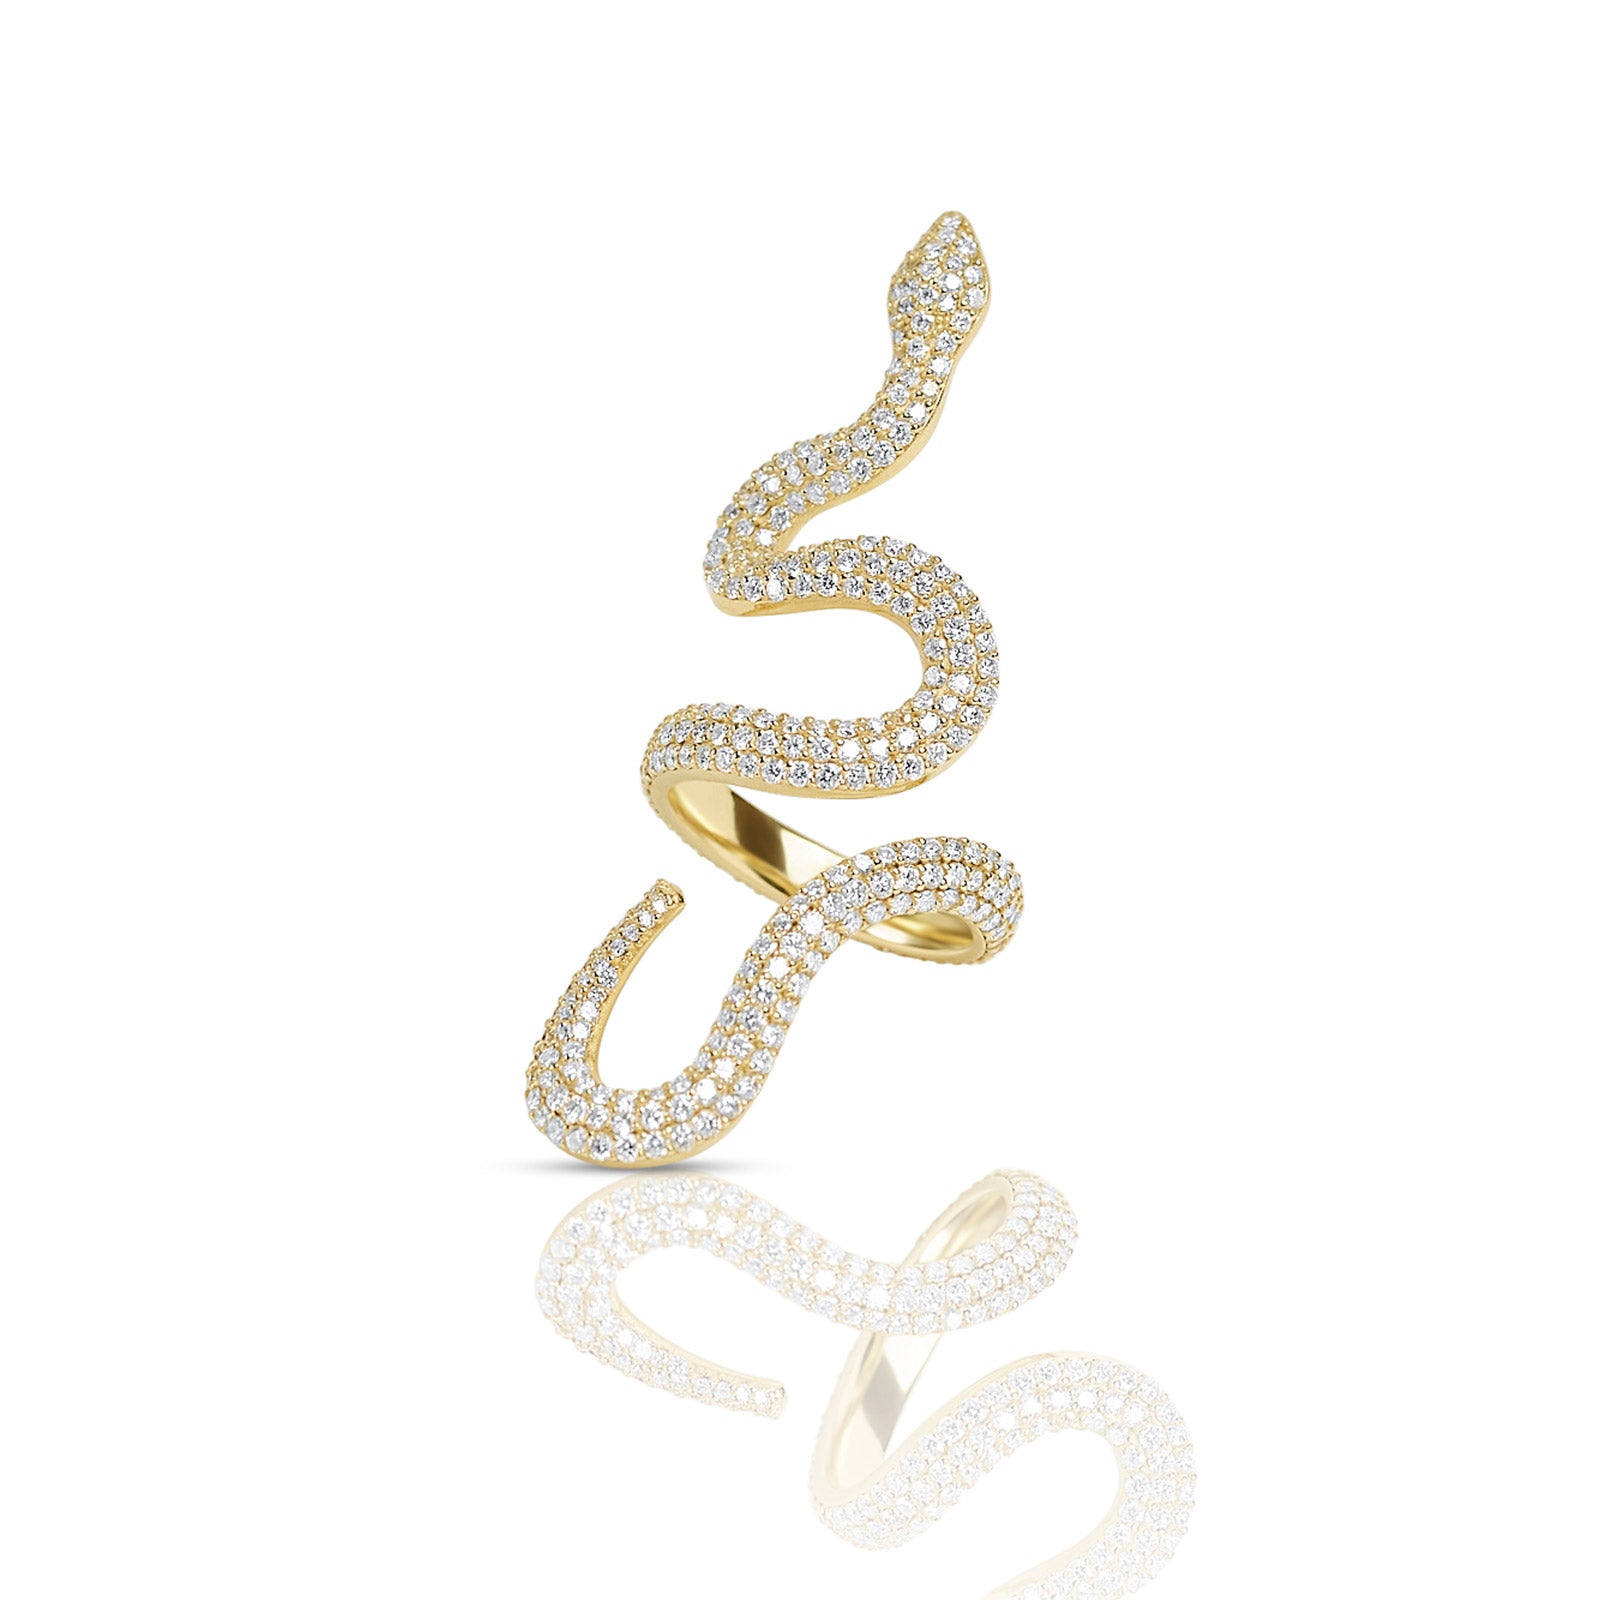 Serpent Ring